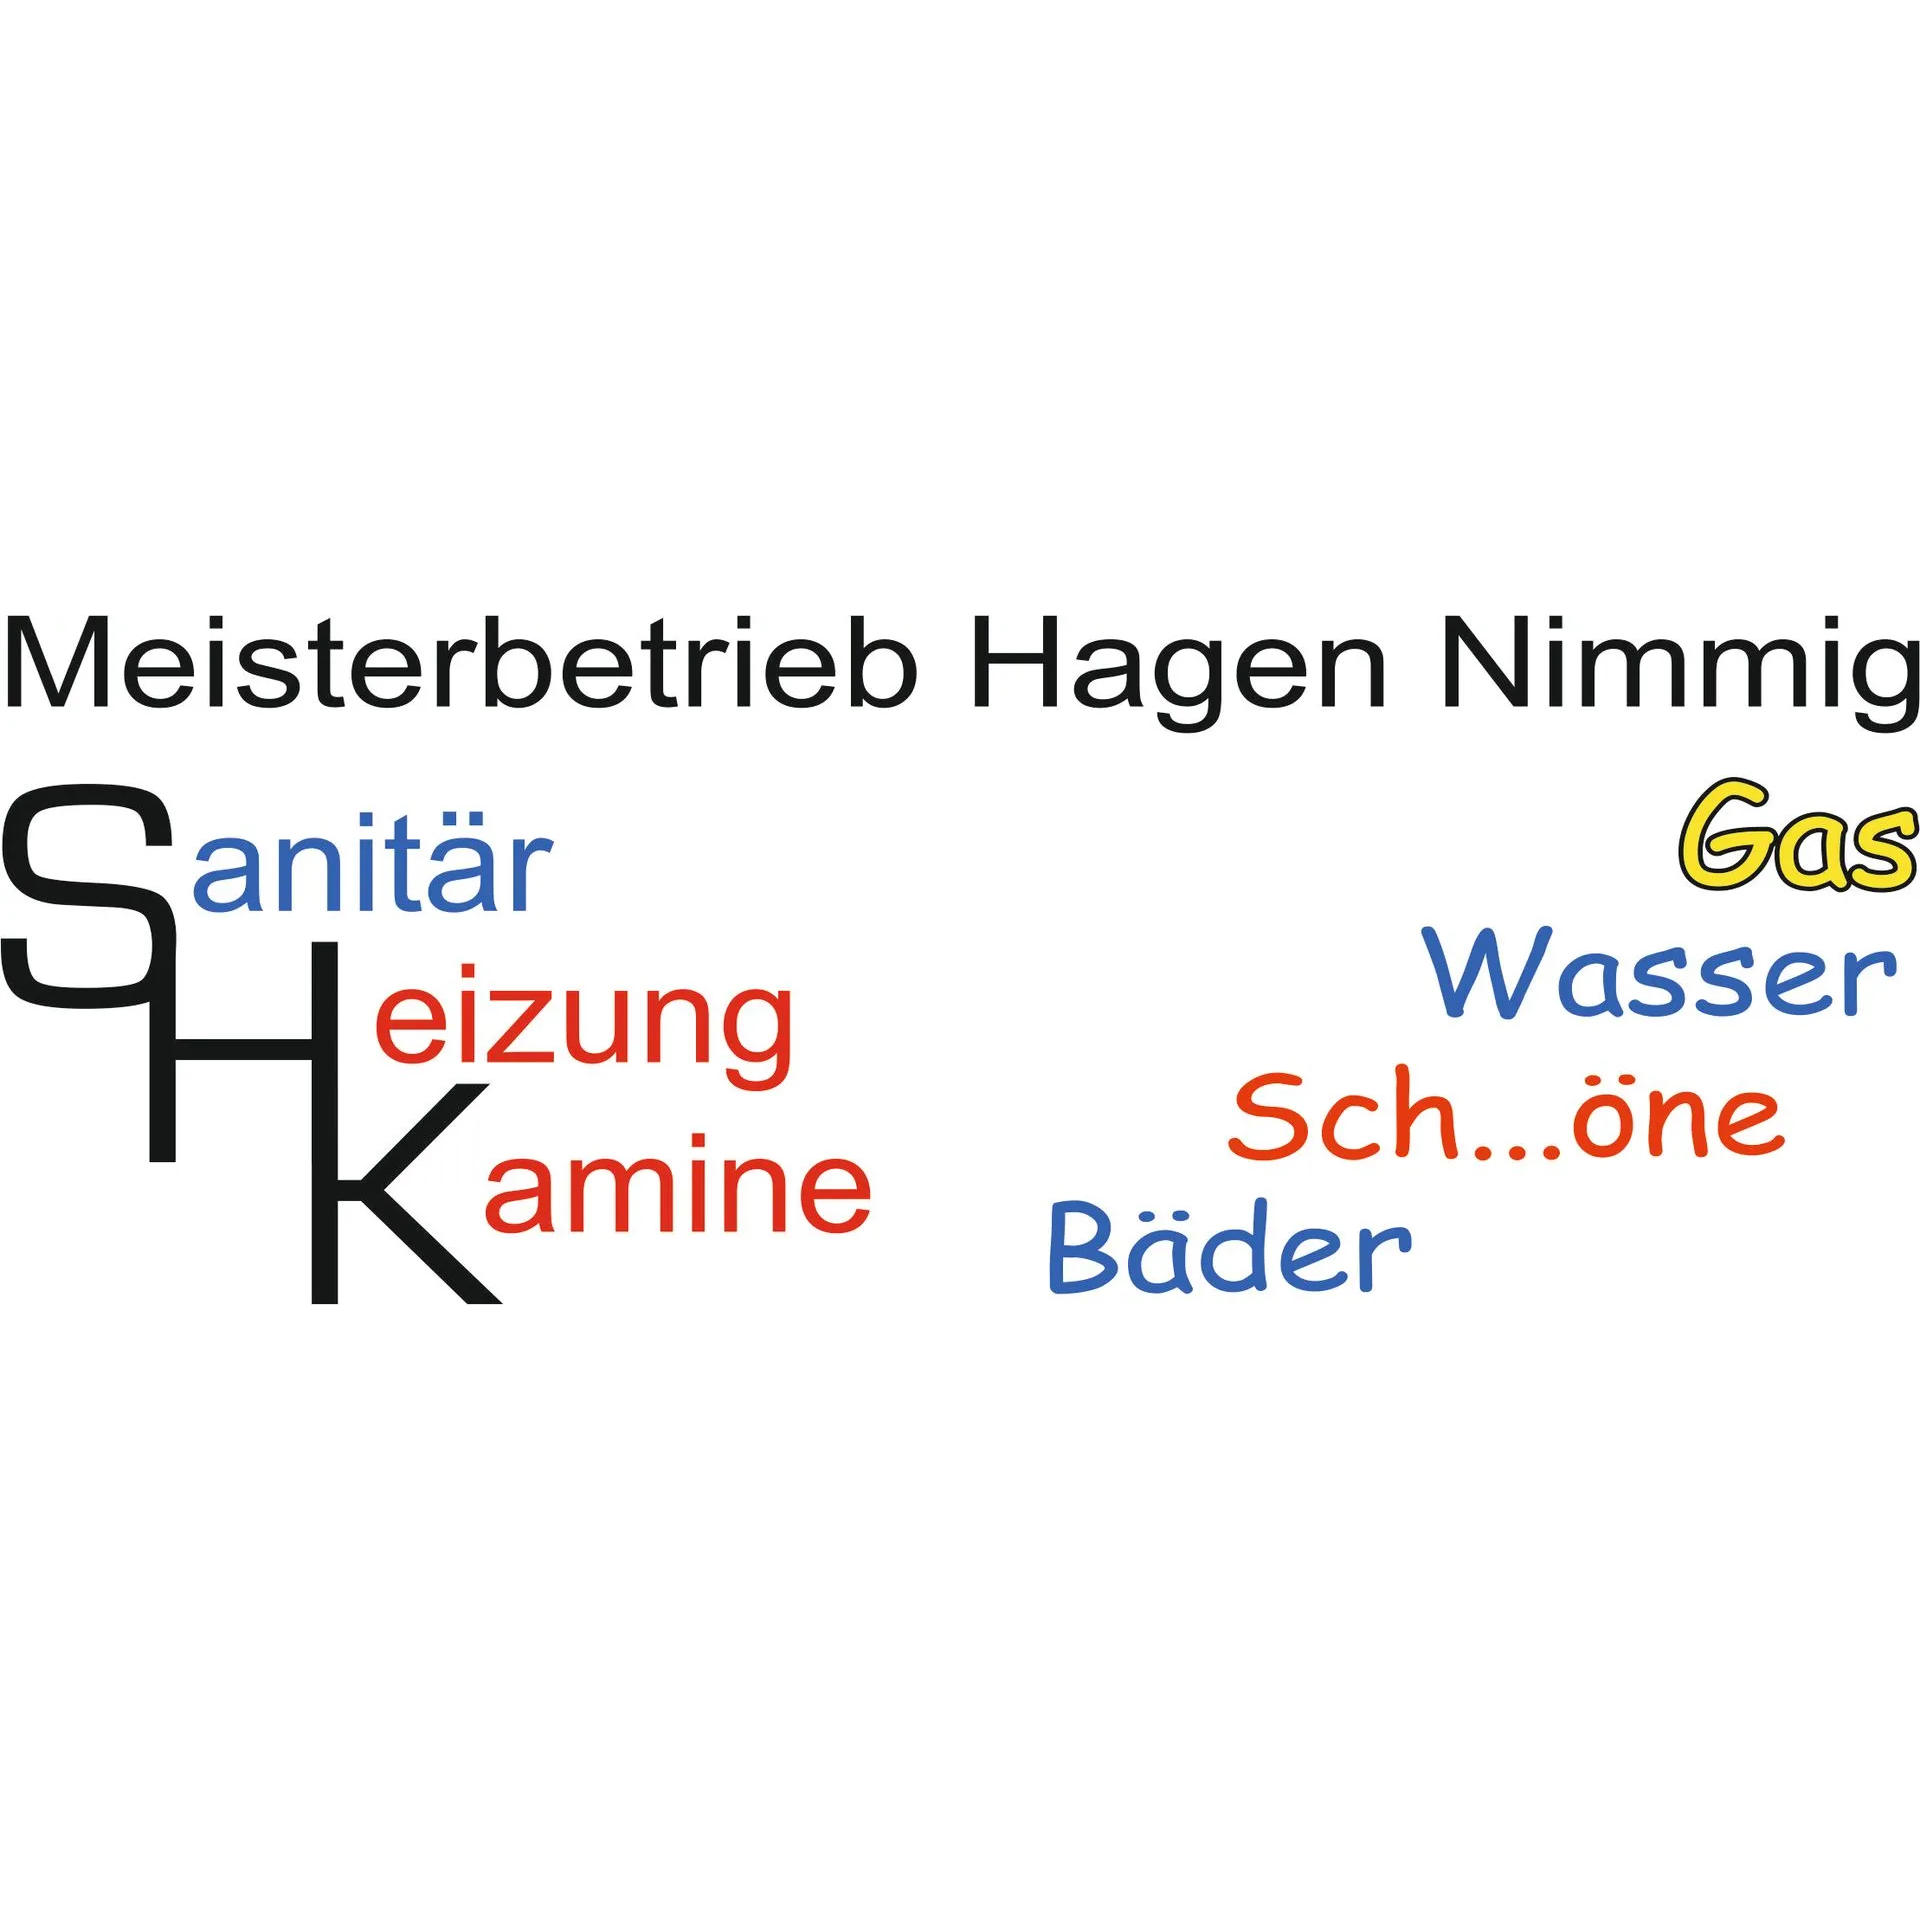 Logo Nimmig Hagen Meisterbetrieb Sanitär, Heizung, Kamine, Kälte, Klima